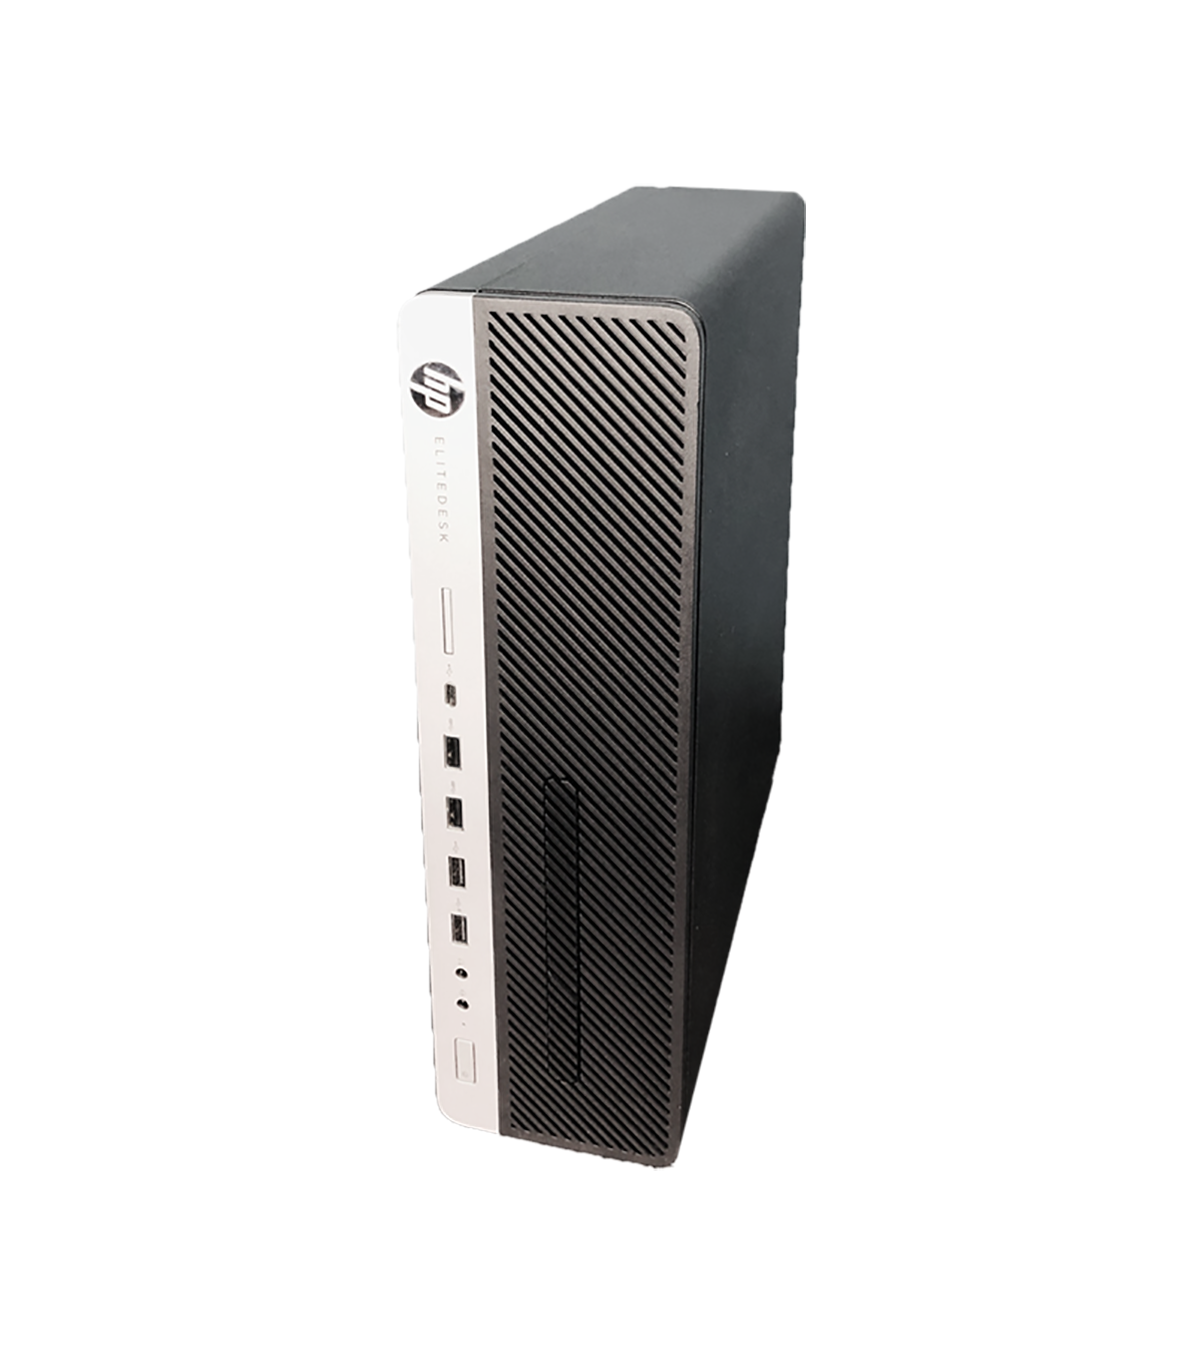 HP EliteDesk 800 G3 SFF Desktop • Intel Core i5 6500 3.2GHz 